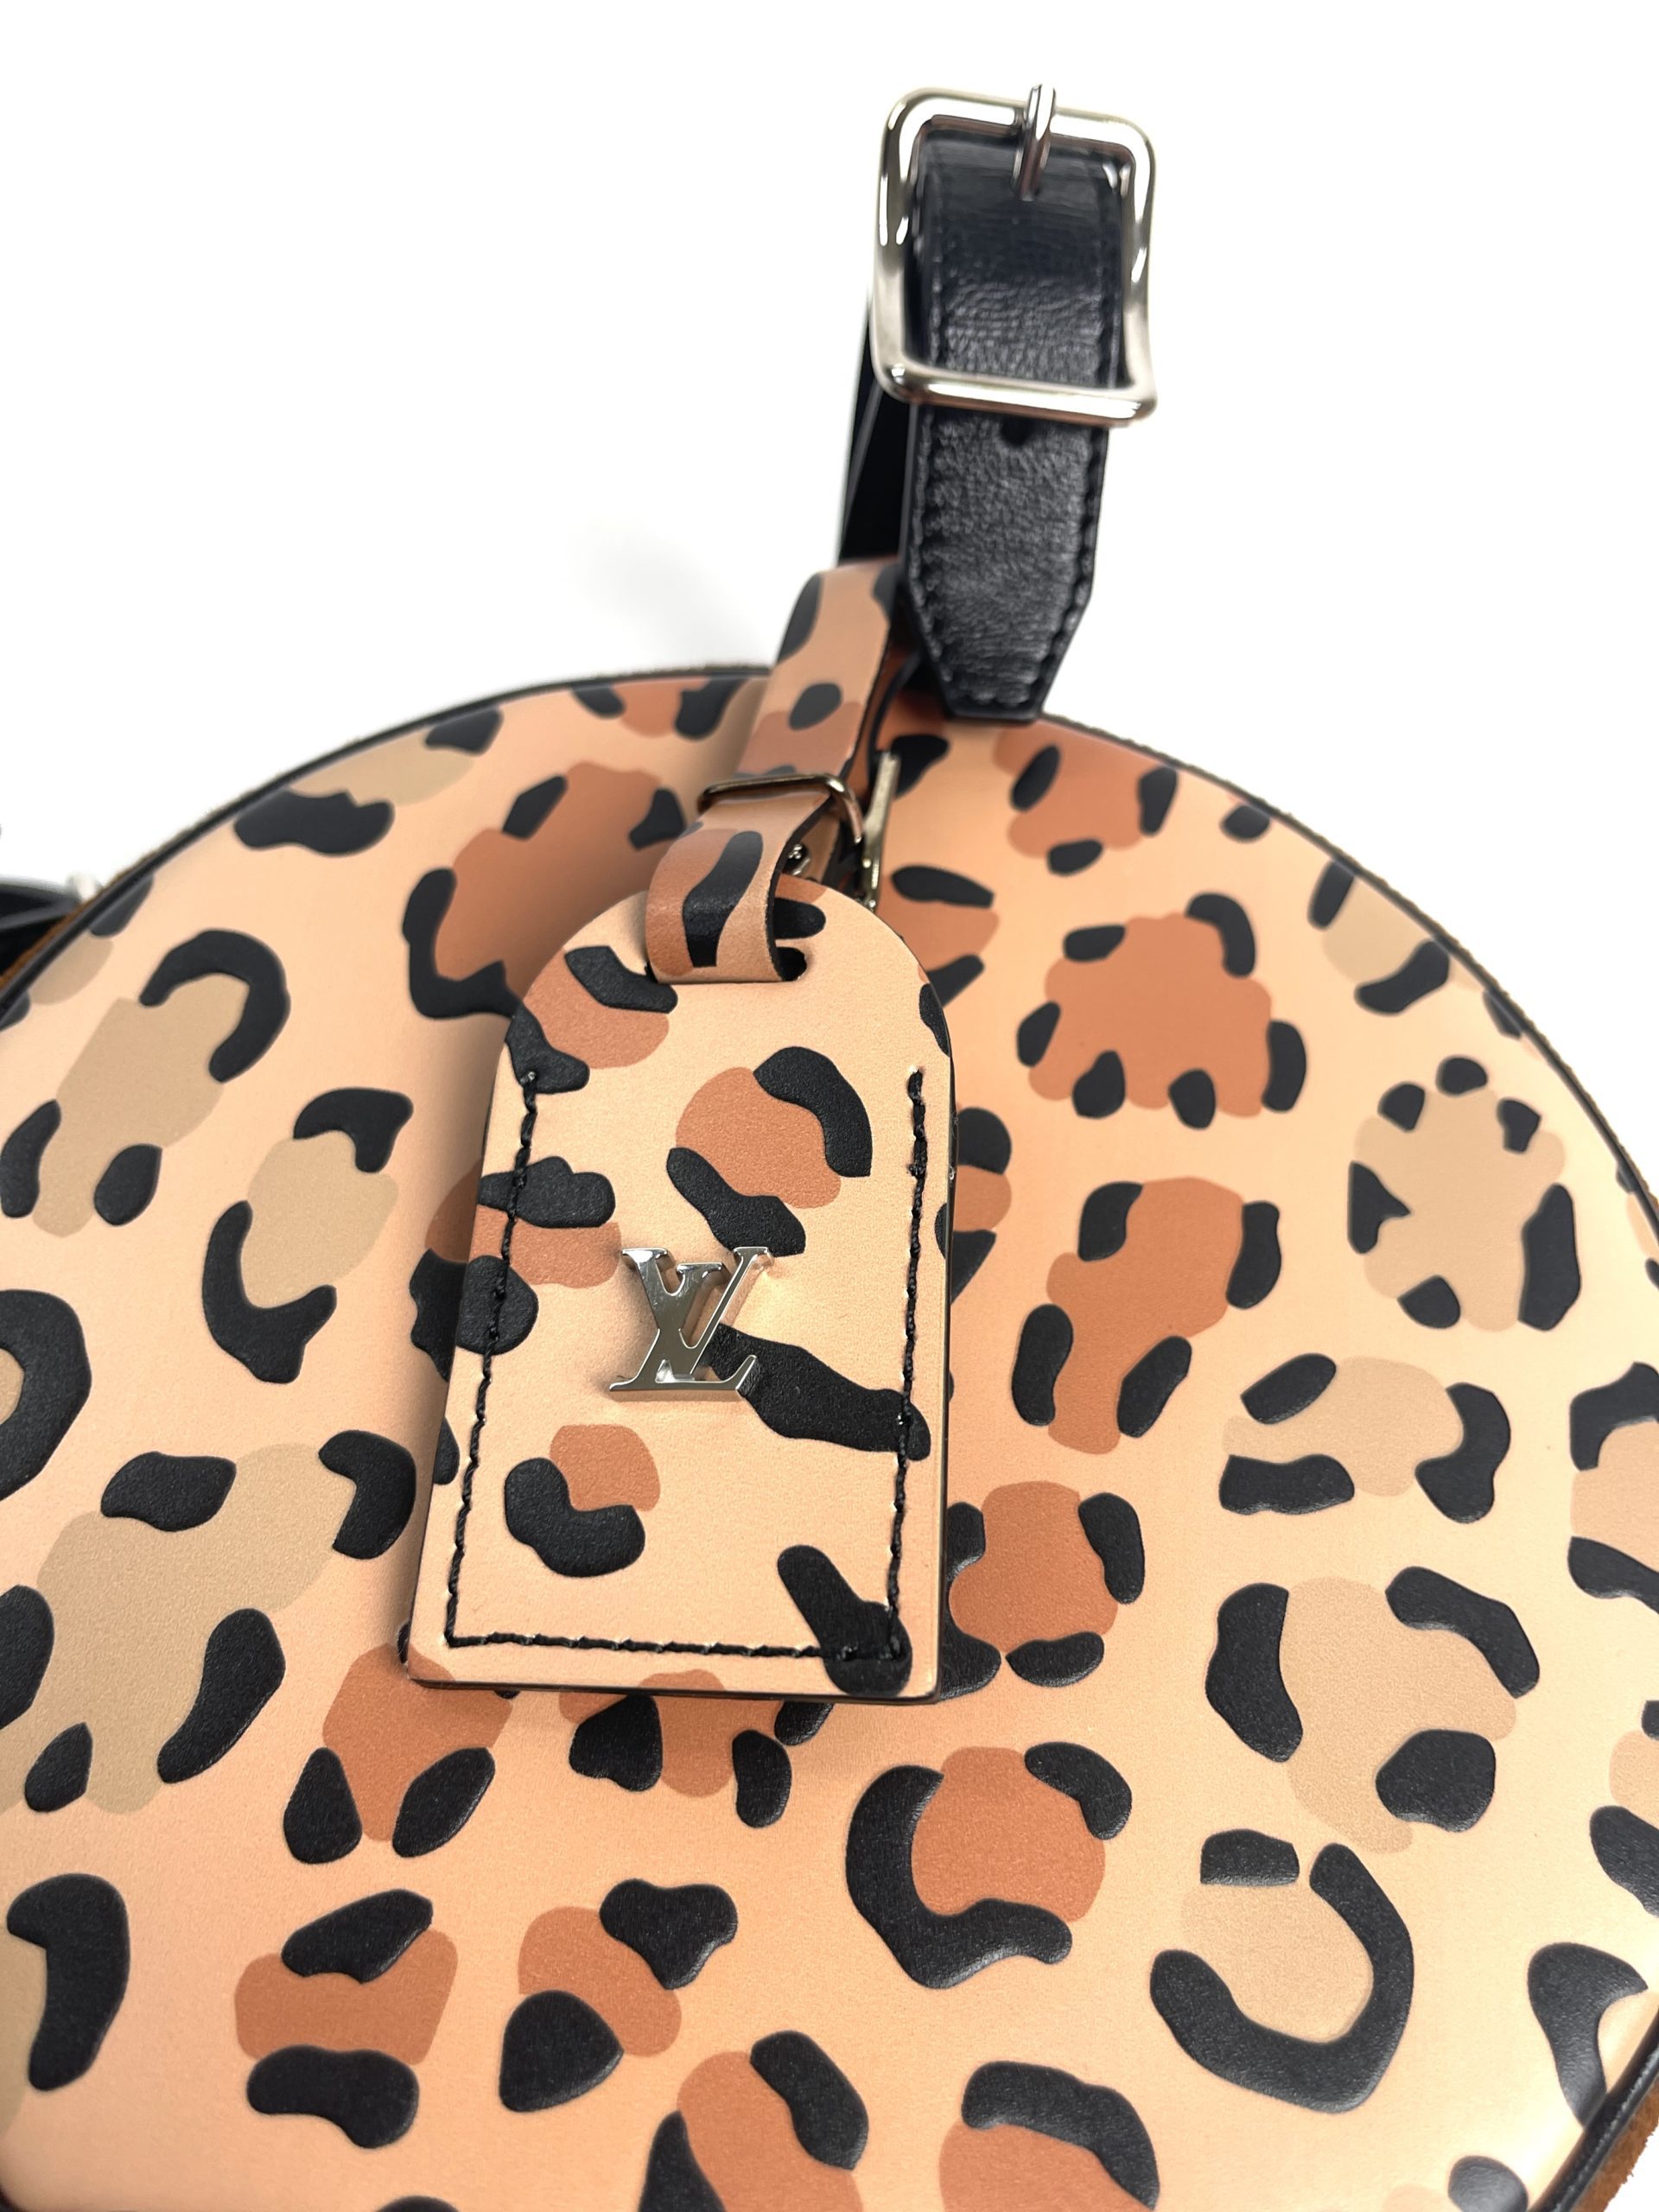 louis vuitton purse cheetah prints